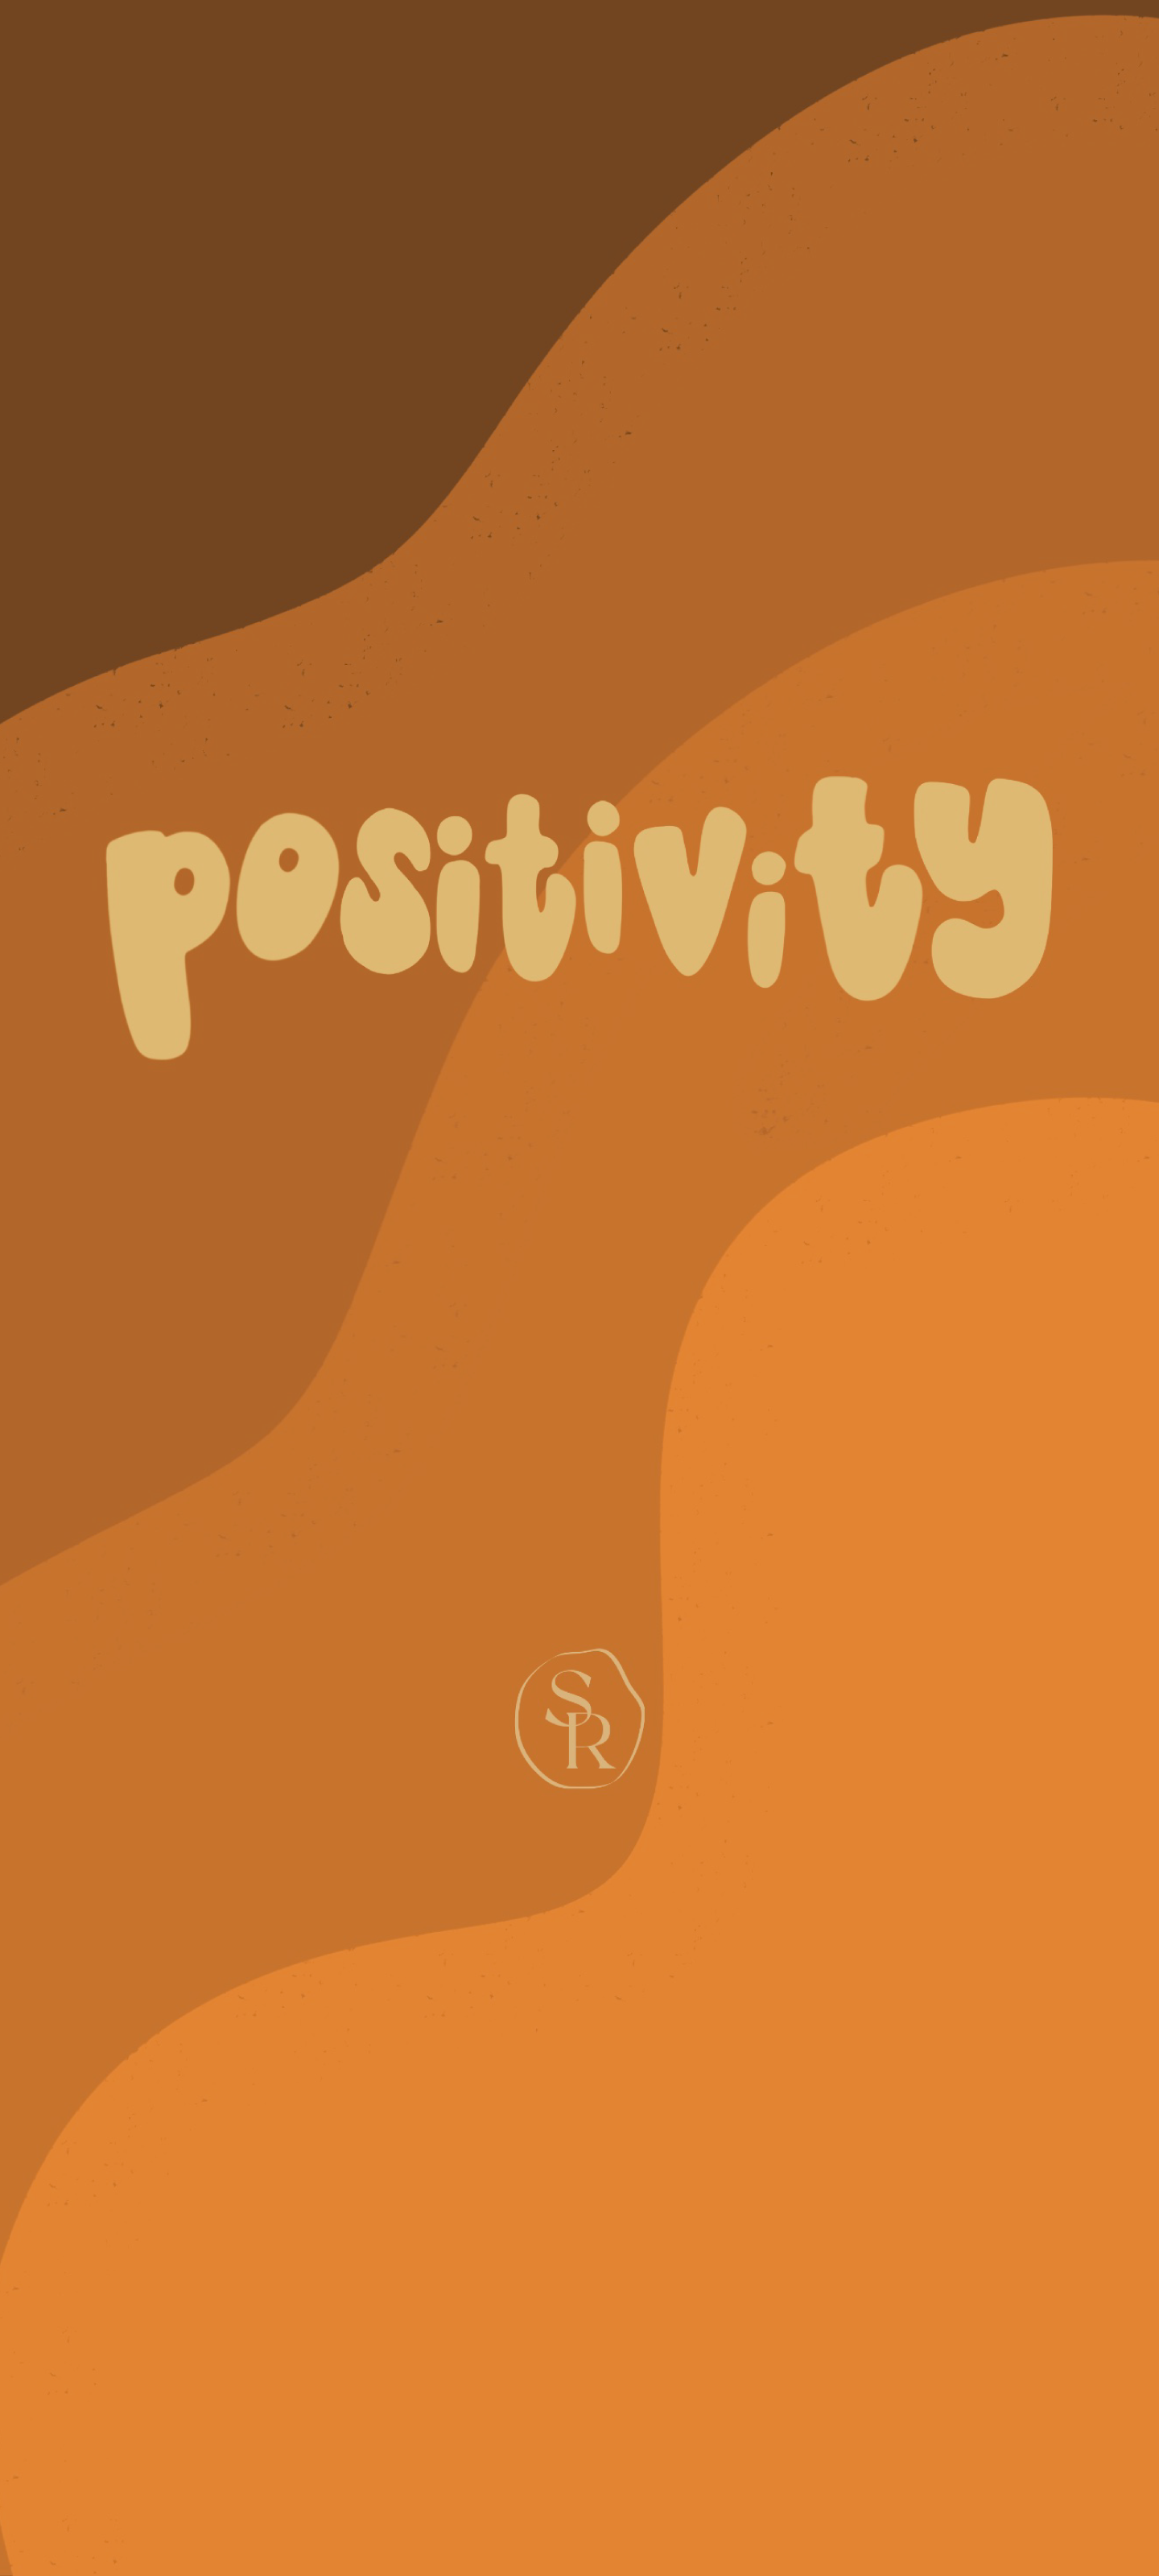 Positivity